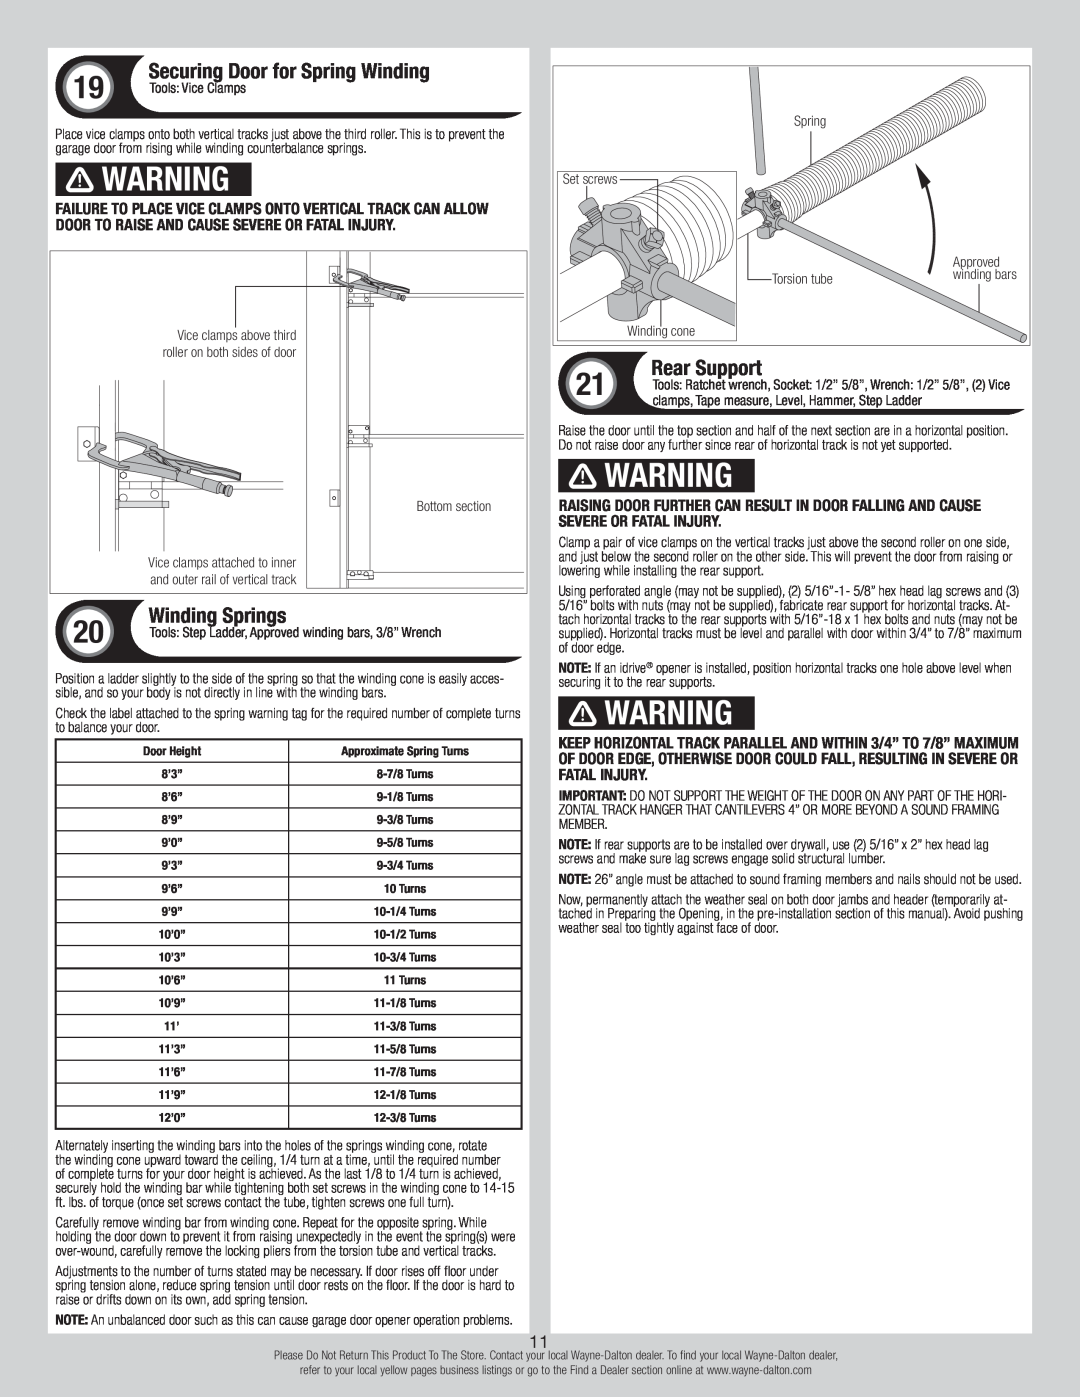 Wayne-Dalton 8500, 8300 installation instructions Rear Support, Winding Springs, Securing Door for Spring Winding 